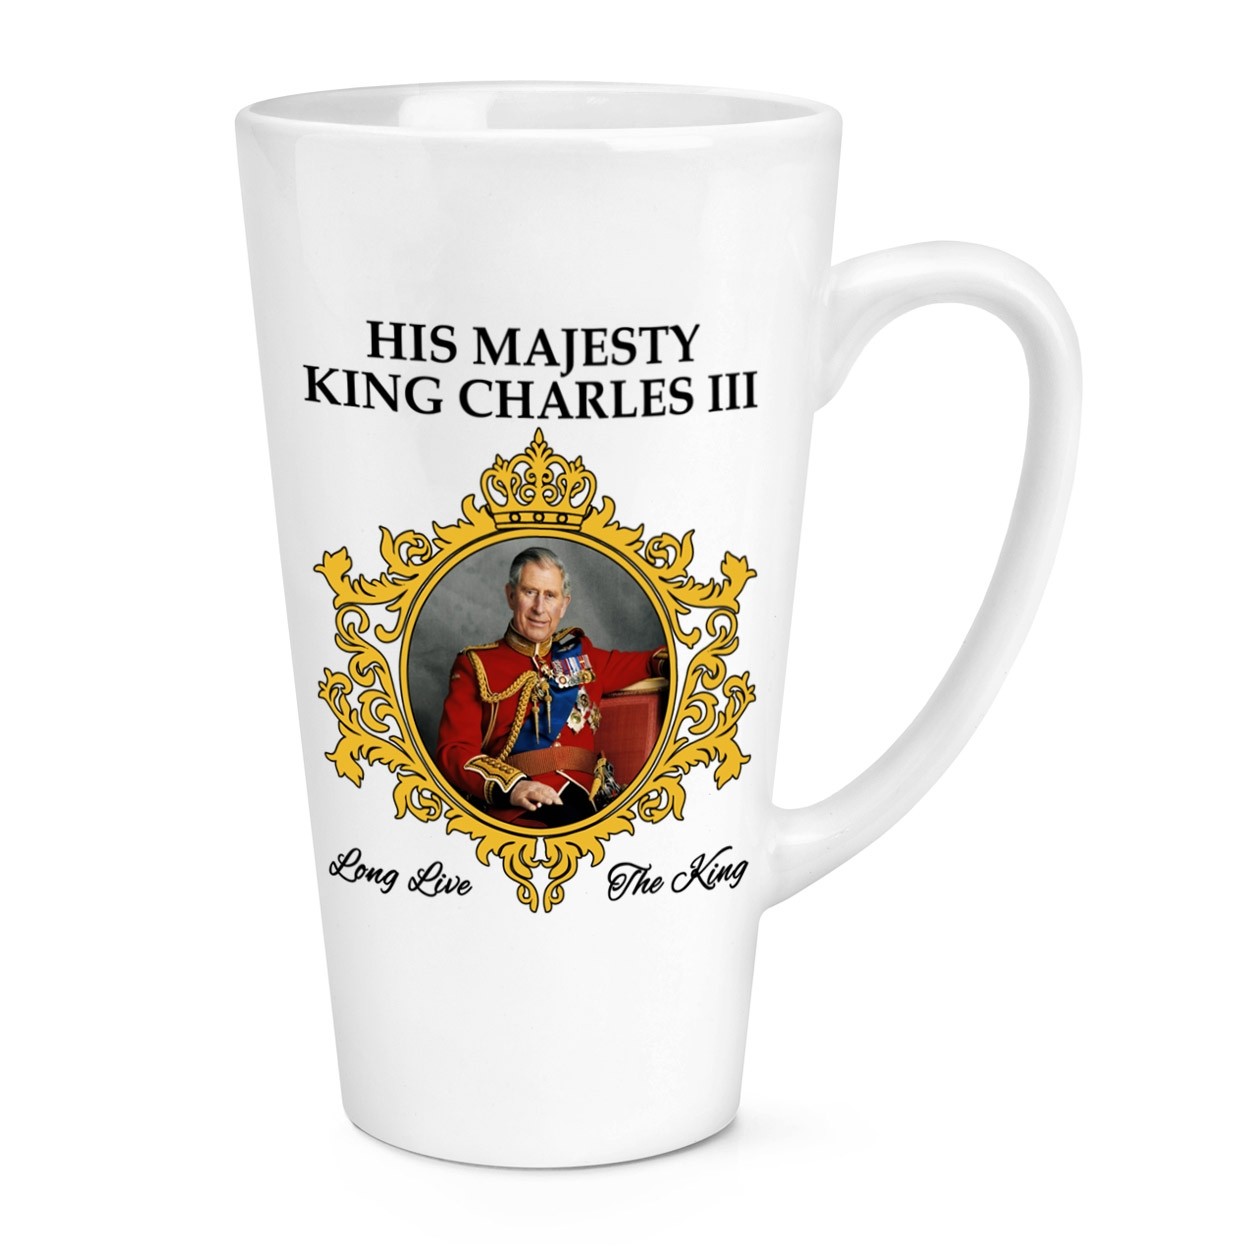 King Charles III 2022 17oz Large Latte Mug Cup Commemorative Gift His Majesty